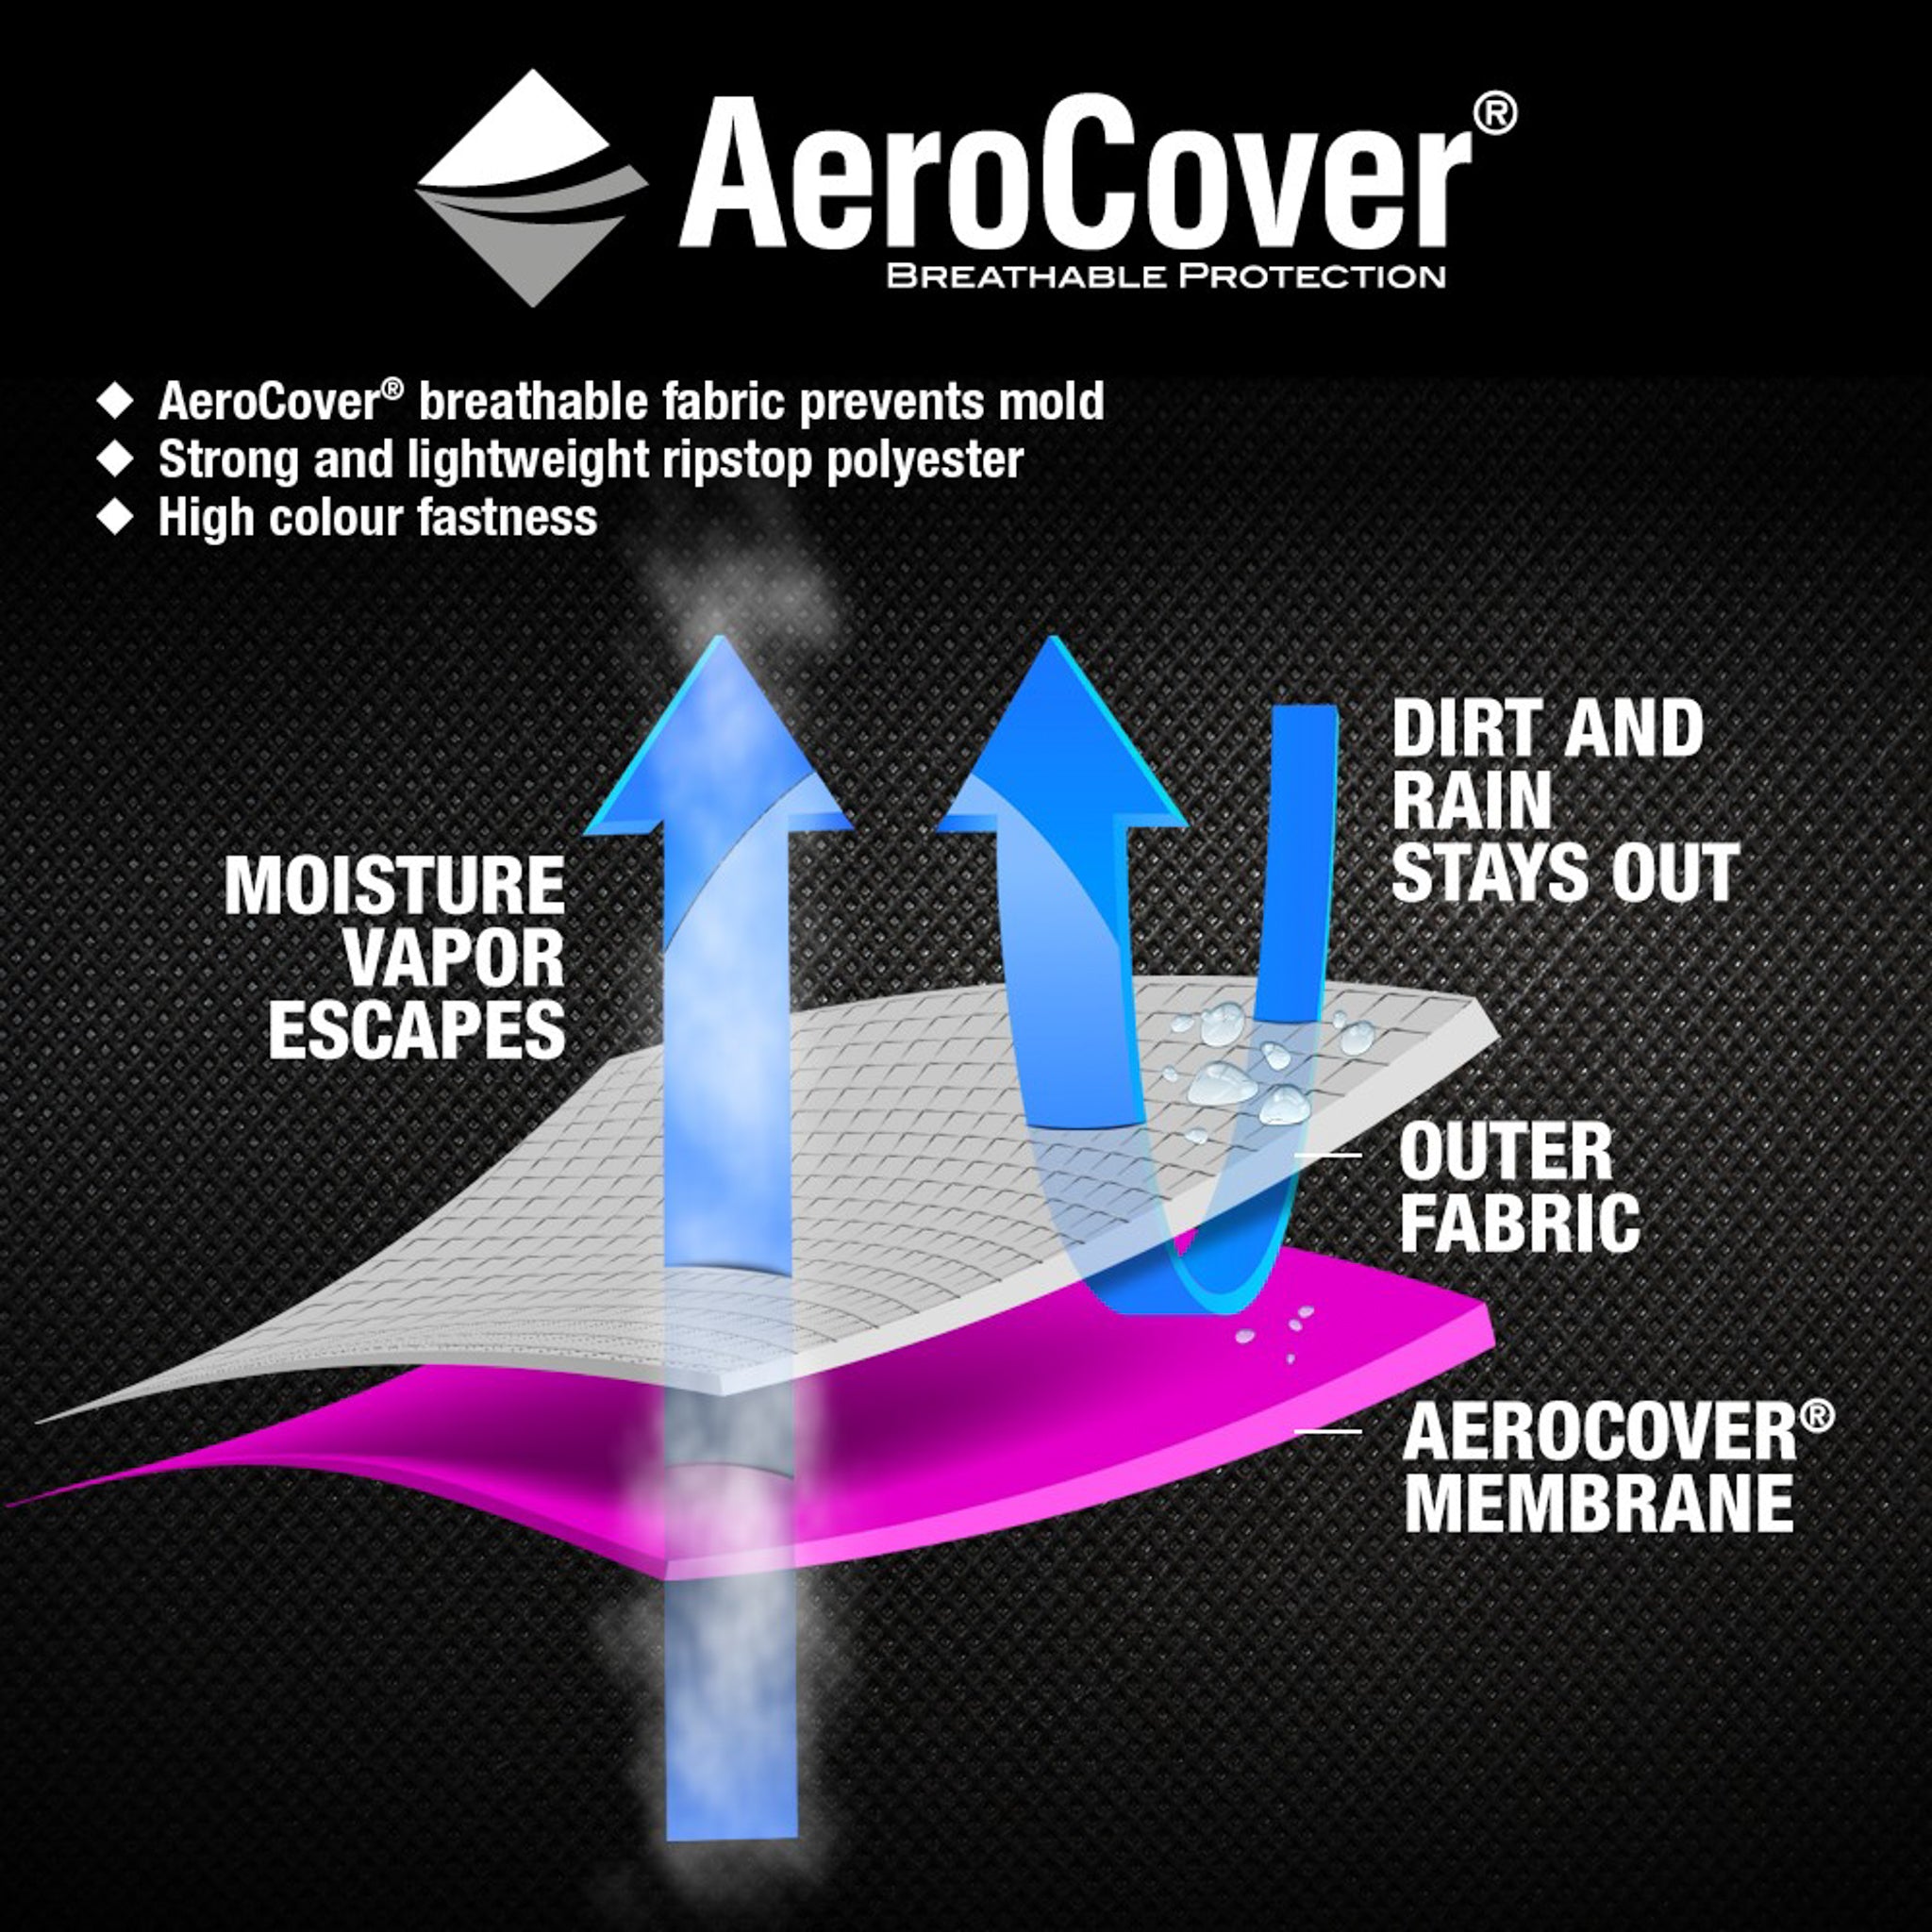 AeroCover - Right Hand Platform Cover 375x300x90xH30/45/70cm high